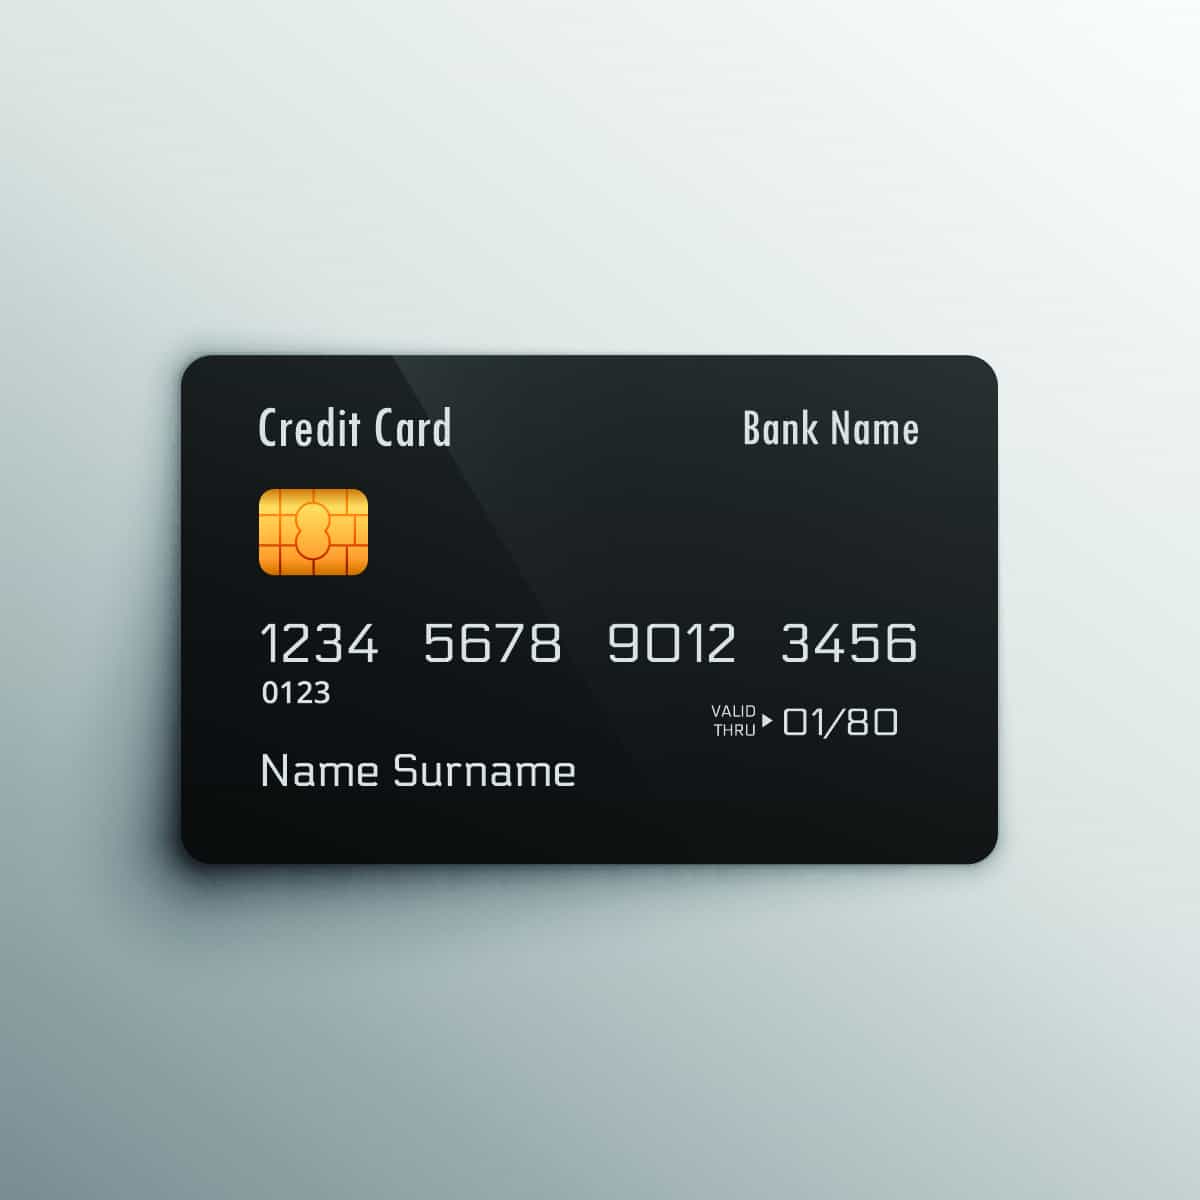 2 Credit cards